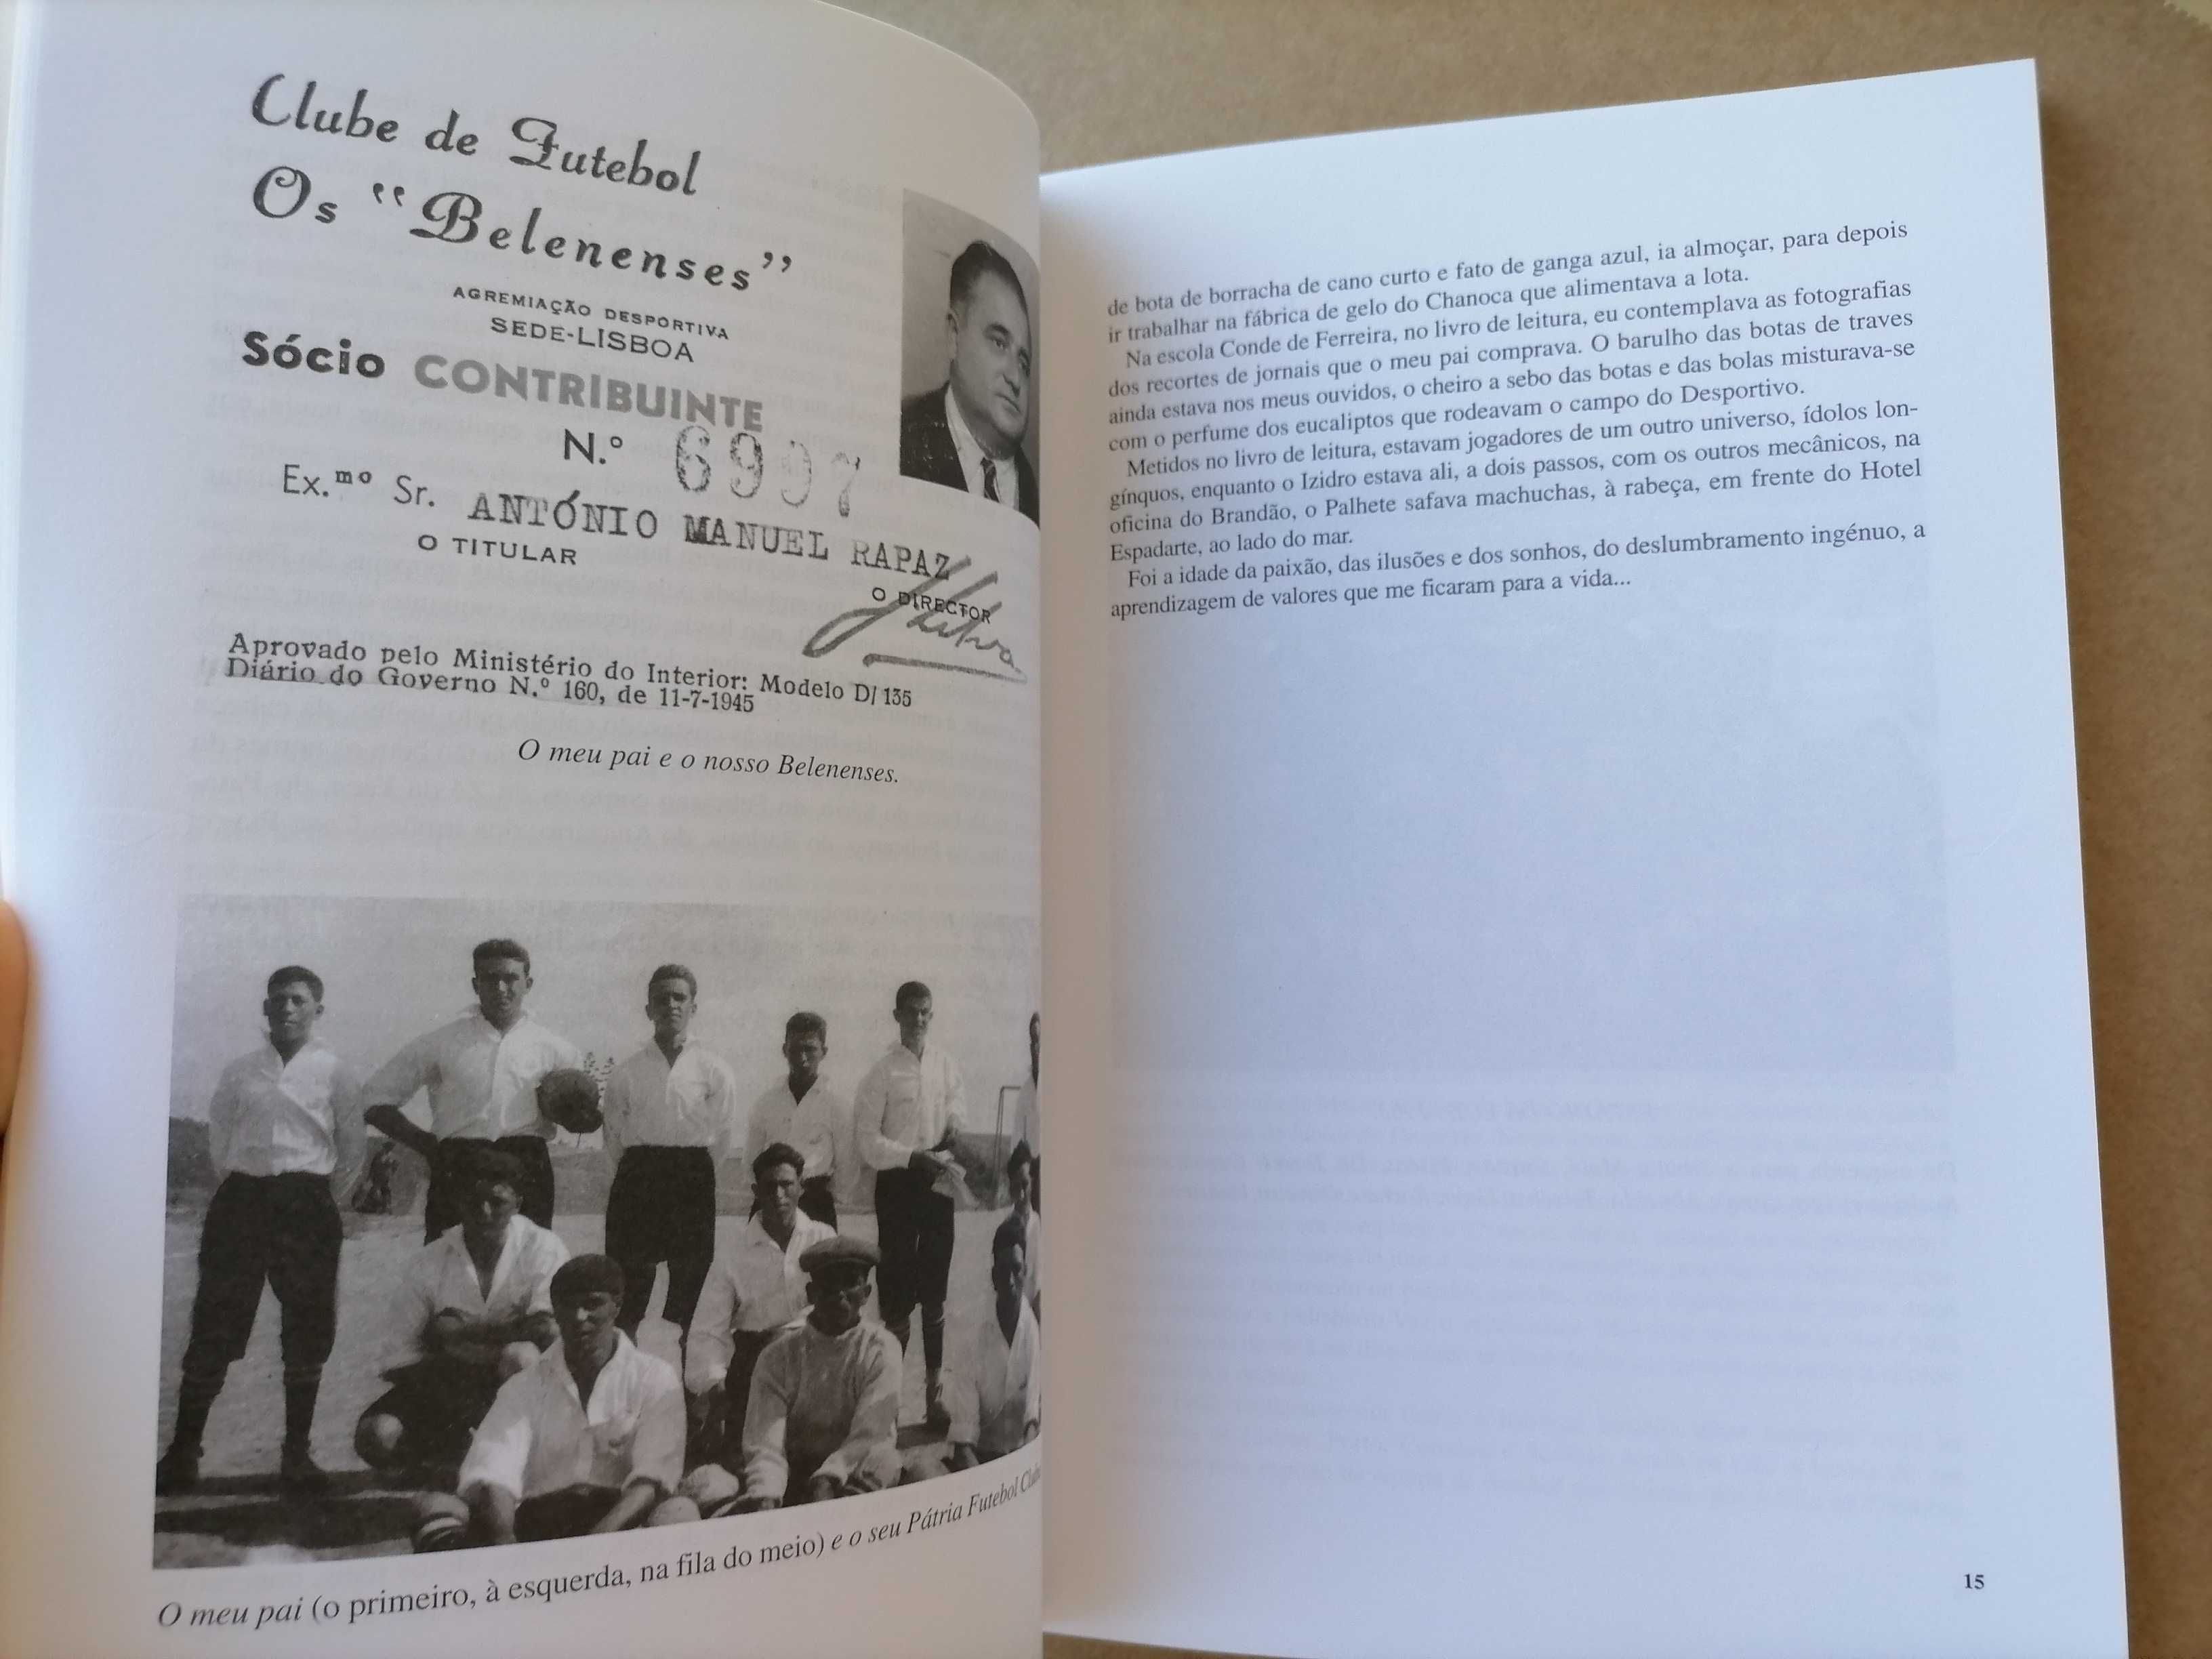 Académica/Manuel Cagica Rapaz LÍBERO E DIRECTO 70 e Tal Contos Futebol